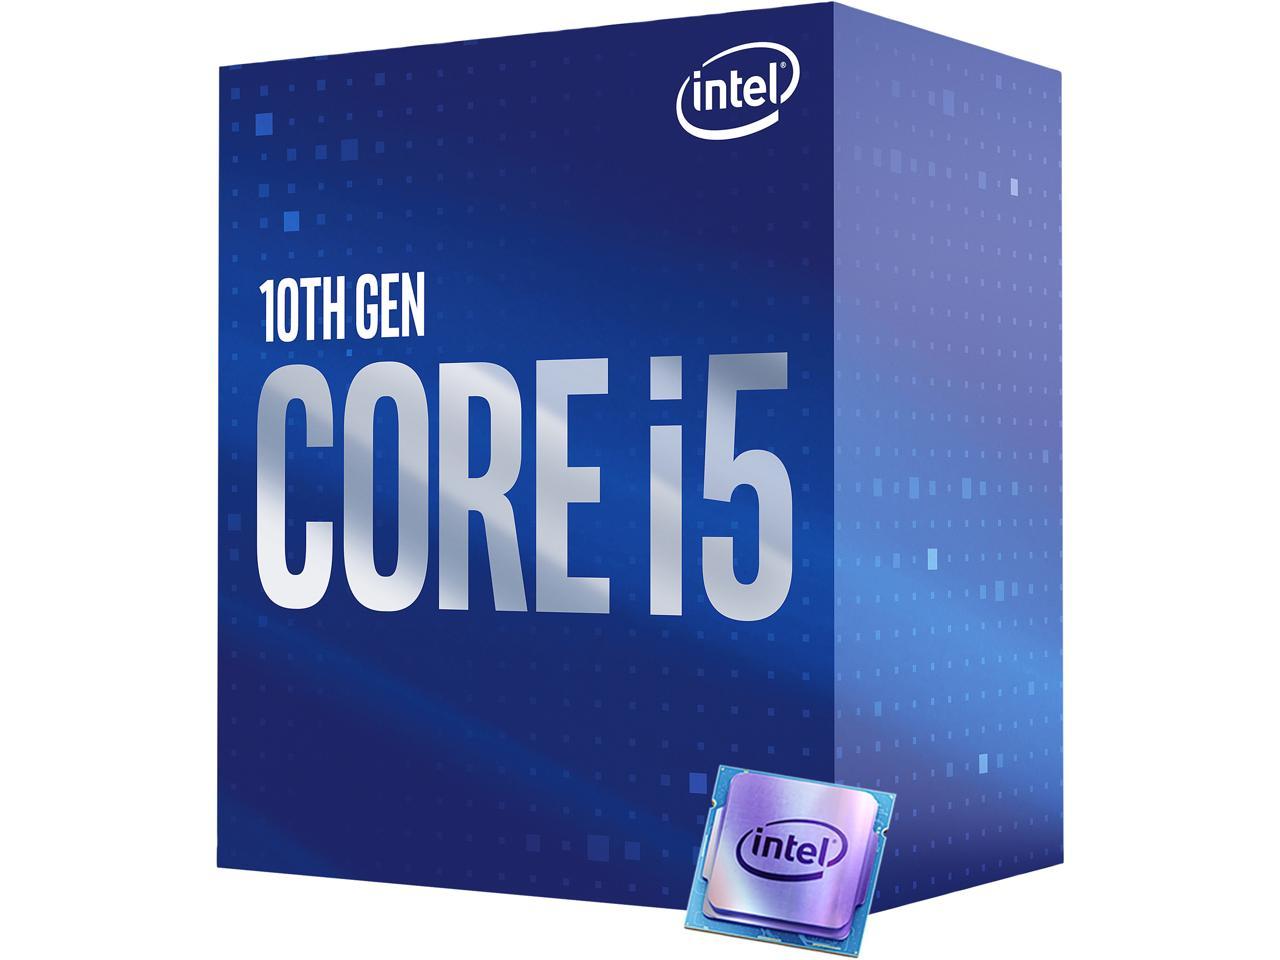 Intel Core i5-10400 2.90Ghz 12MB LGA 1200 CPU Desktop Processor $127.44 + Free Shipping w/ Amazon Prime